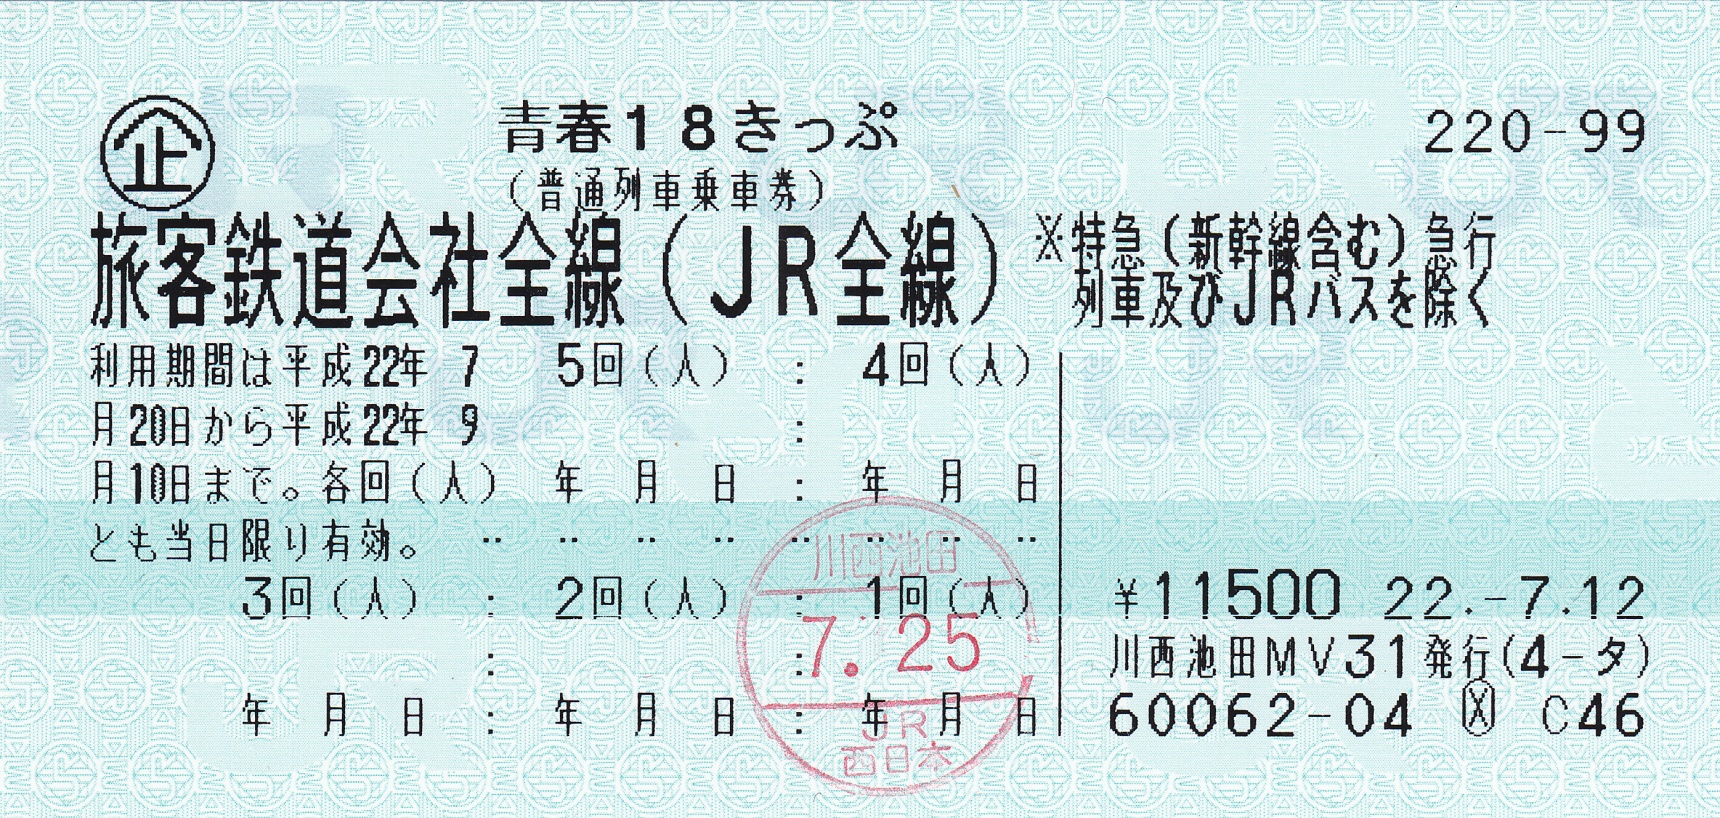 JR Pass หลบไป ใบนี้ถูกกว่าครึ่งๆ Seishun18 !